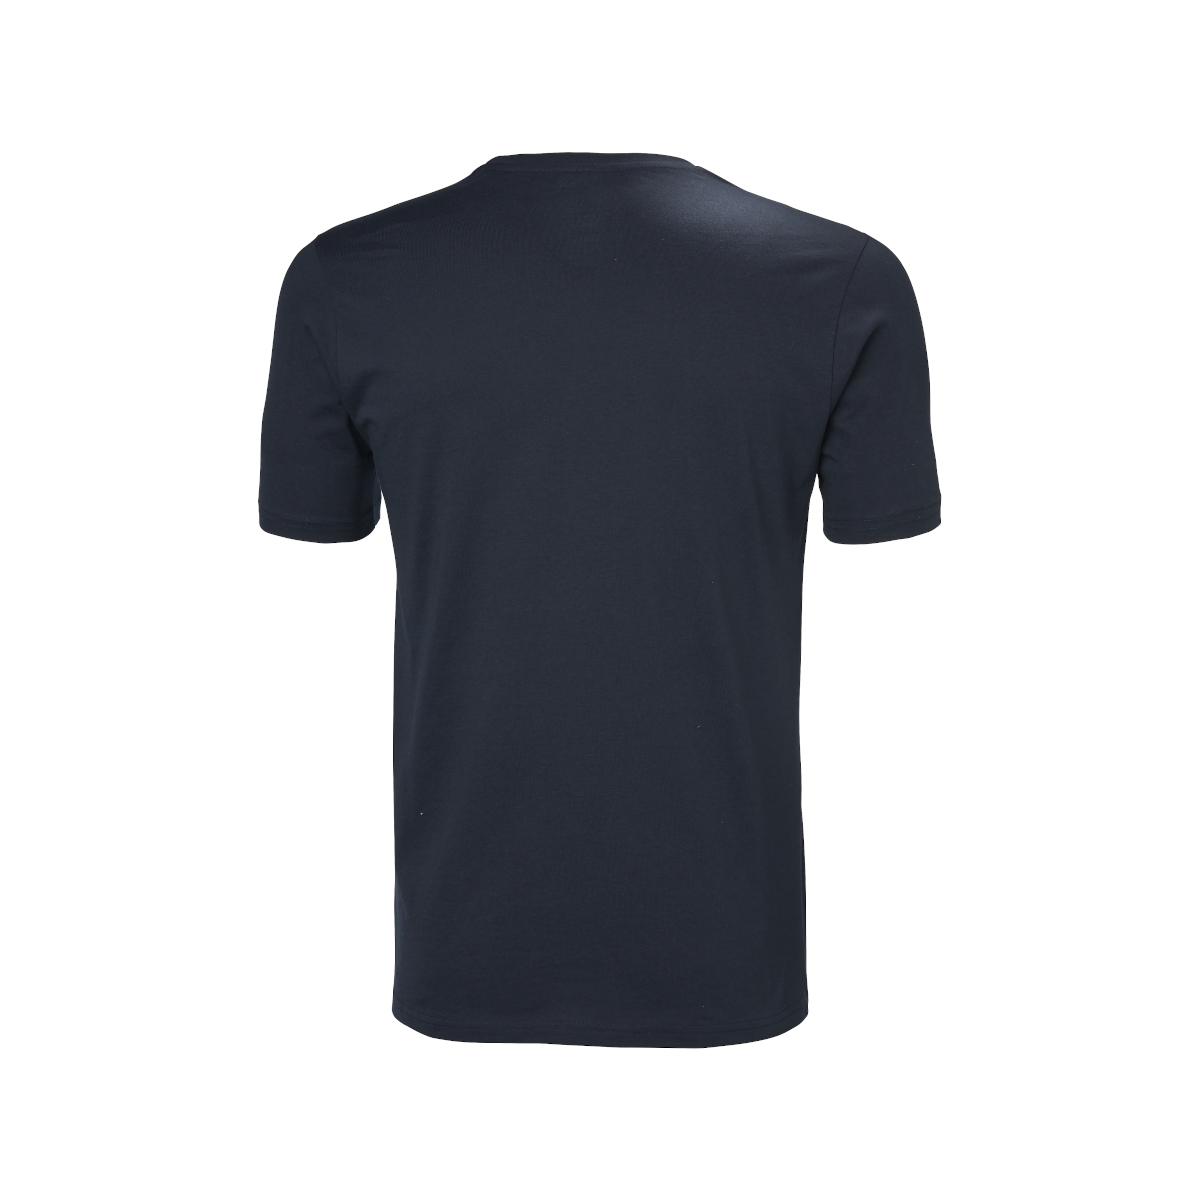 Helly Hansen HH Logo T-shirt homme bleu marine, taille XXL